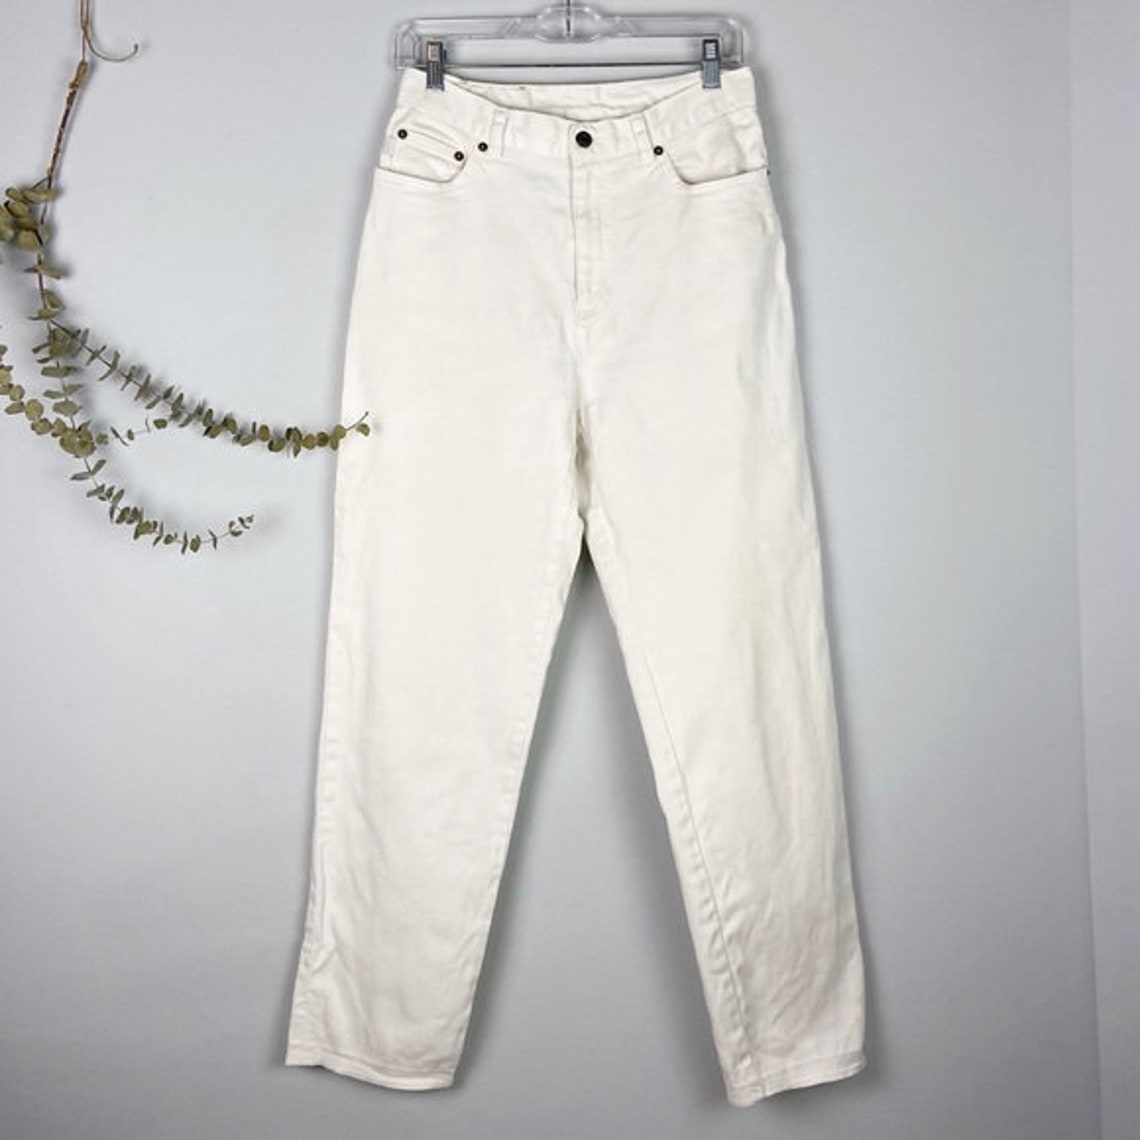 Ralph Lauren Vintage White High-Waisted Jeans | Etsy